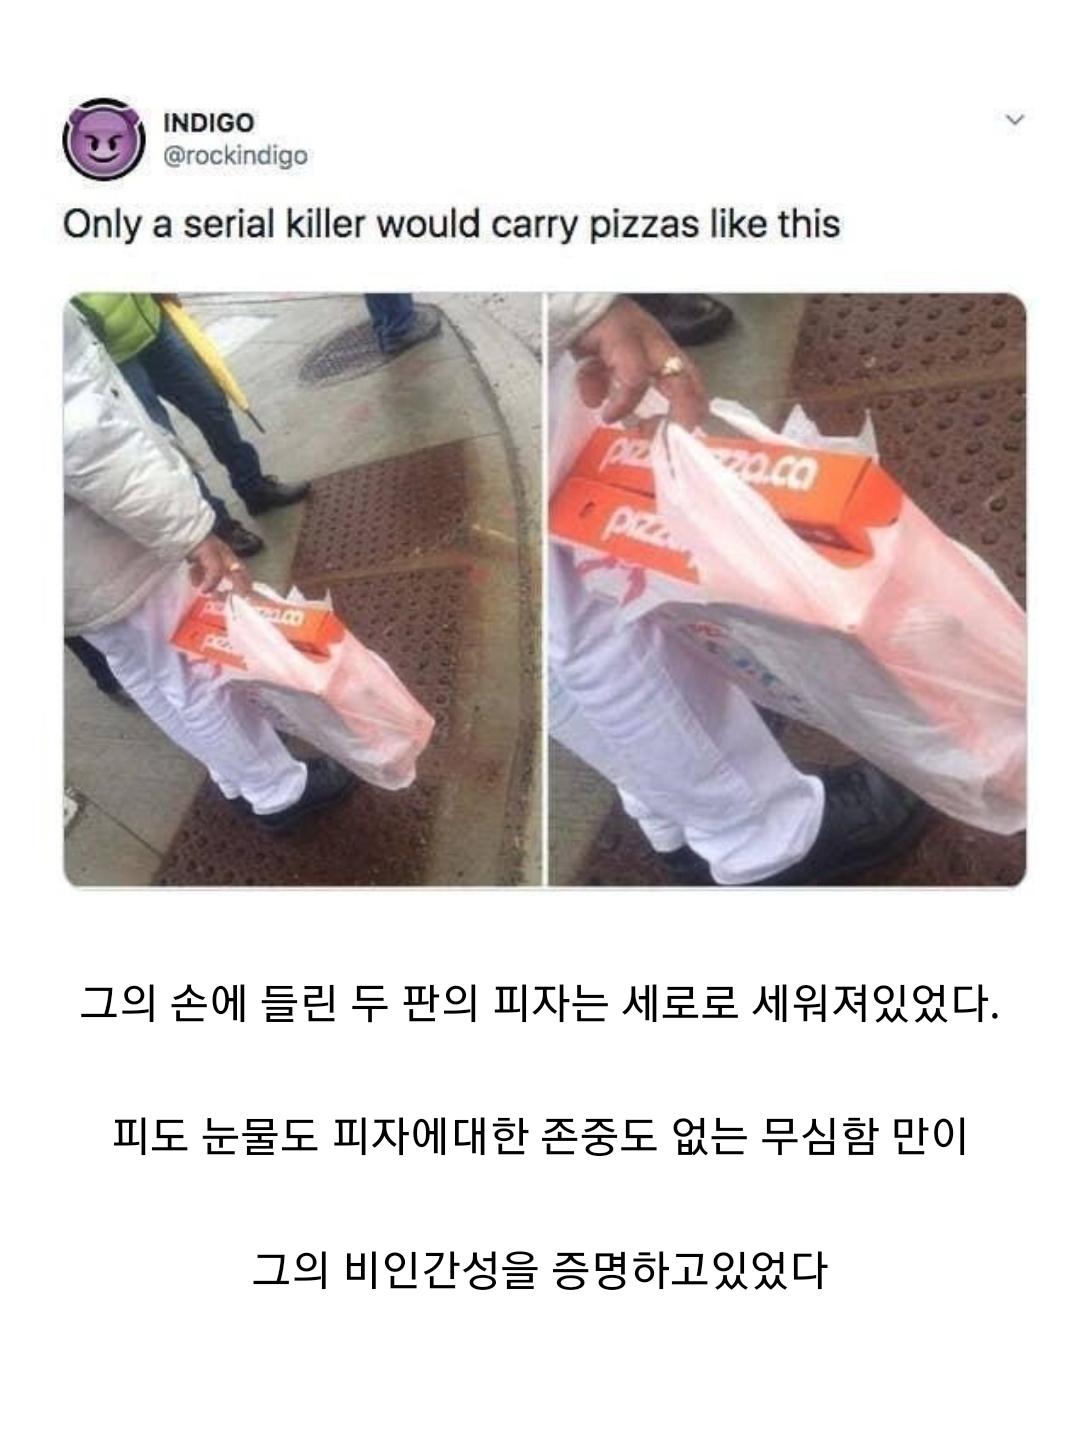 a serial pizza killer